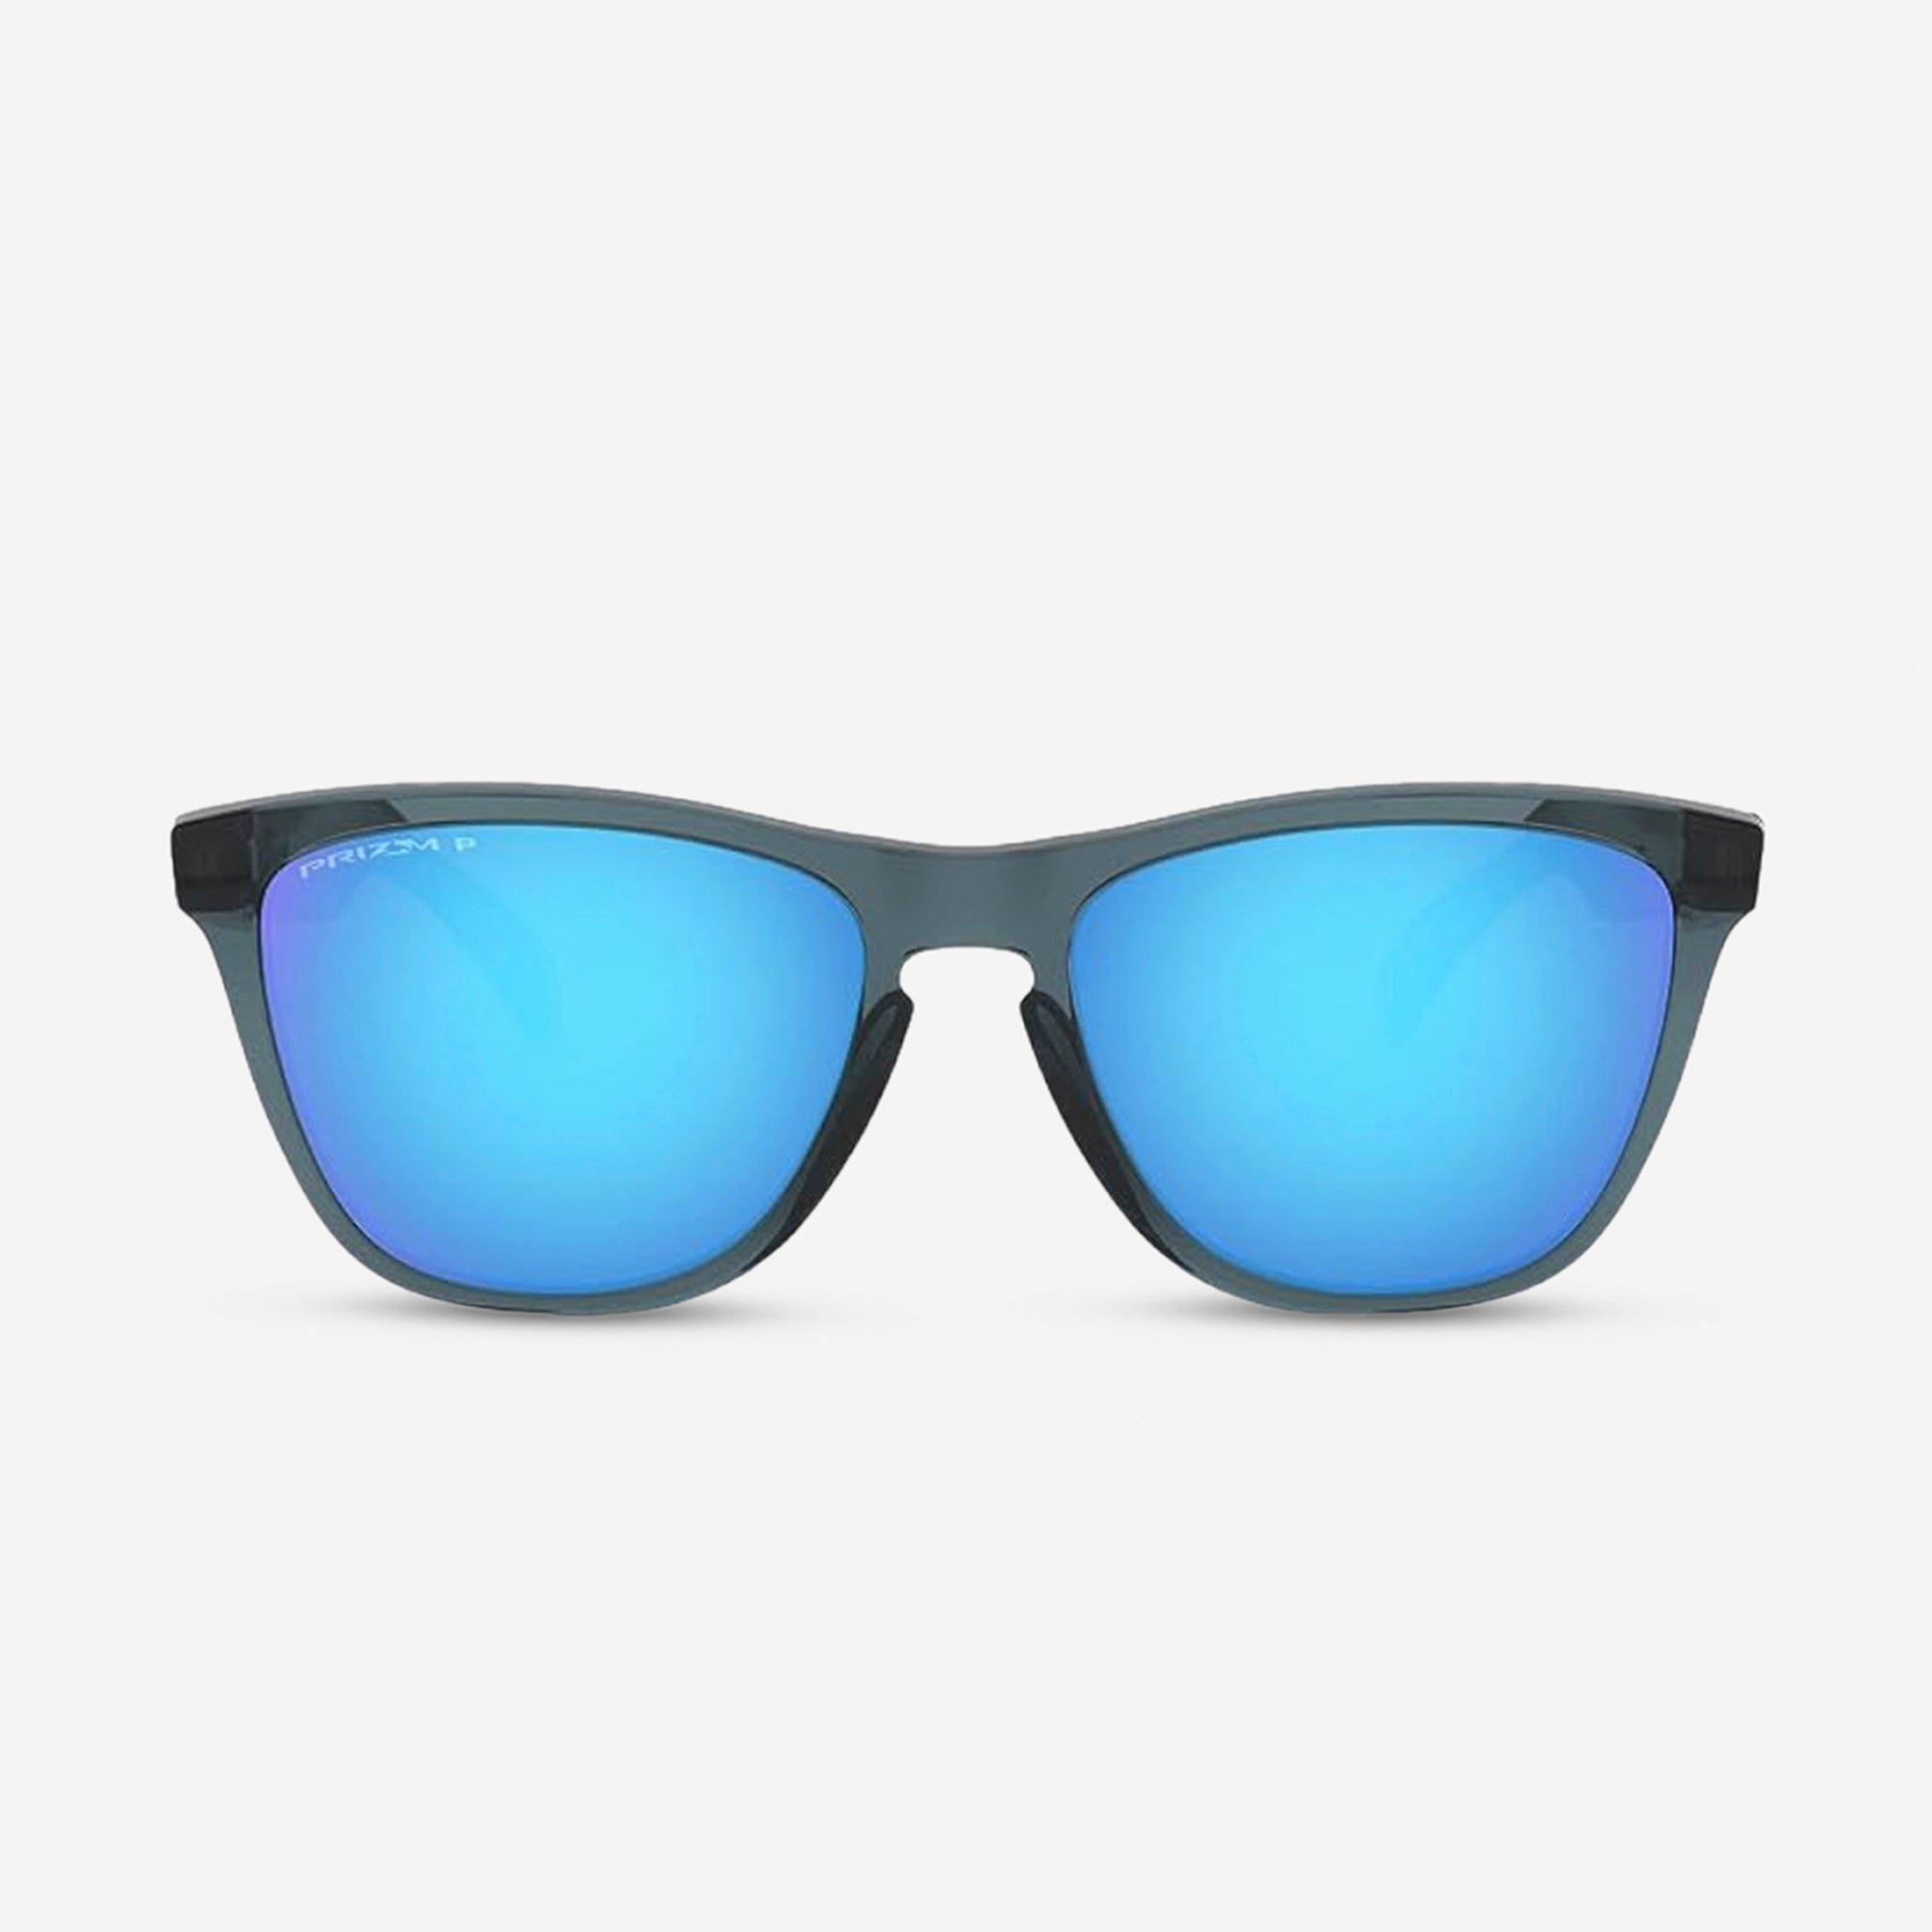 Oakley Frogskins Men's Prizm Blue Polarized Sunglasses 9013 - F6 - THE SOLIST - OAKLEY